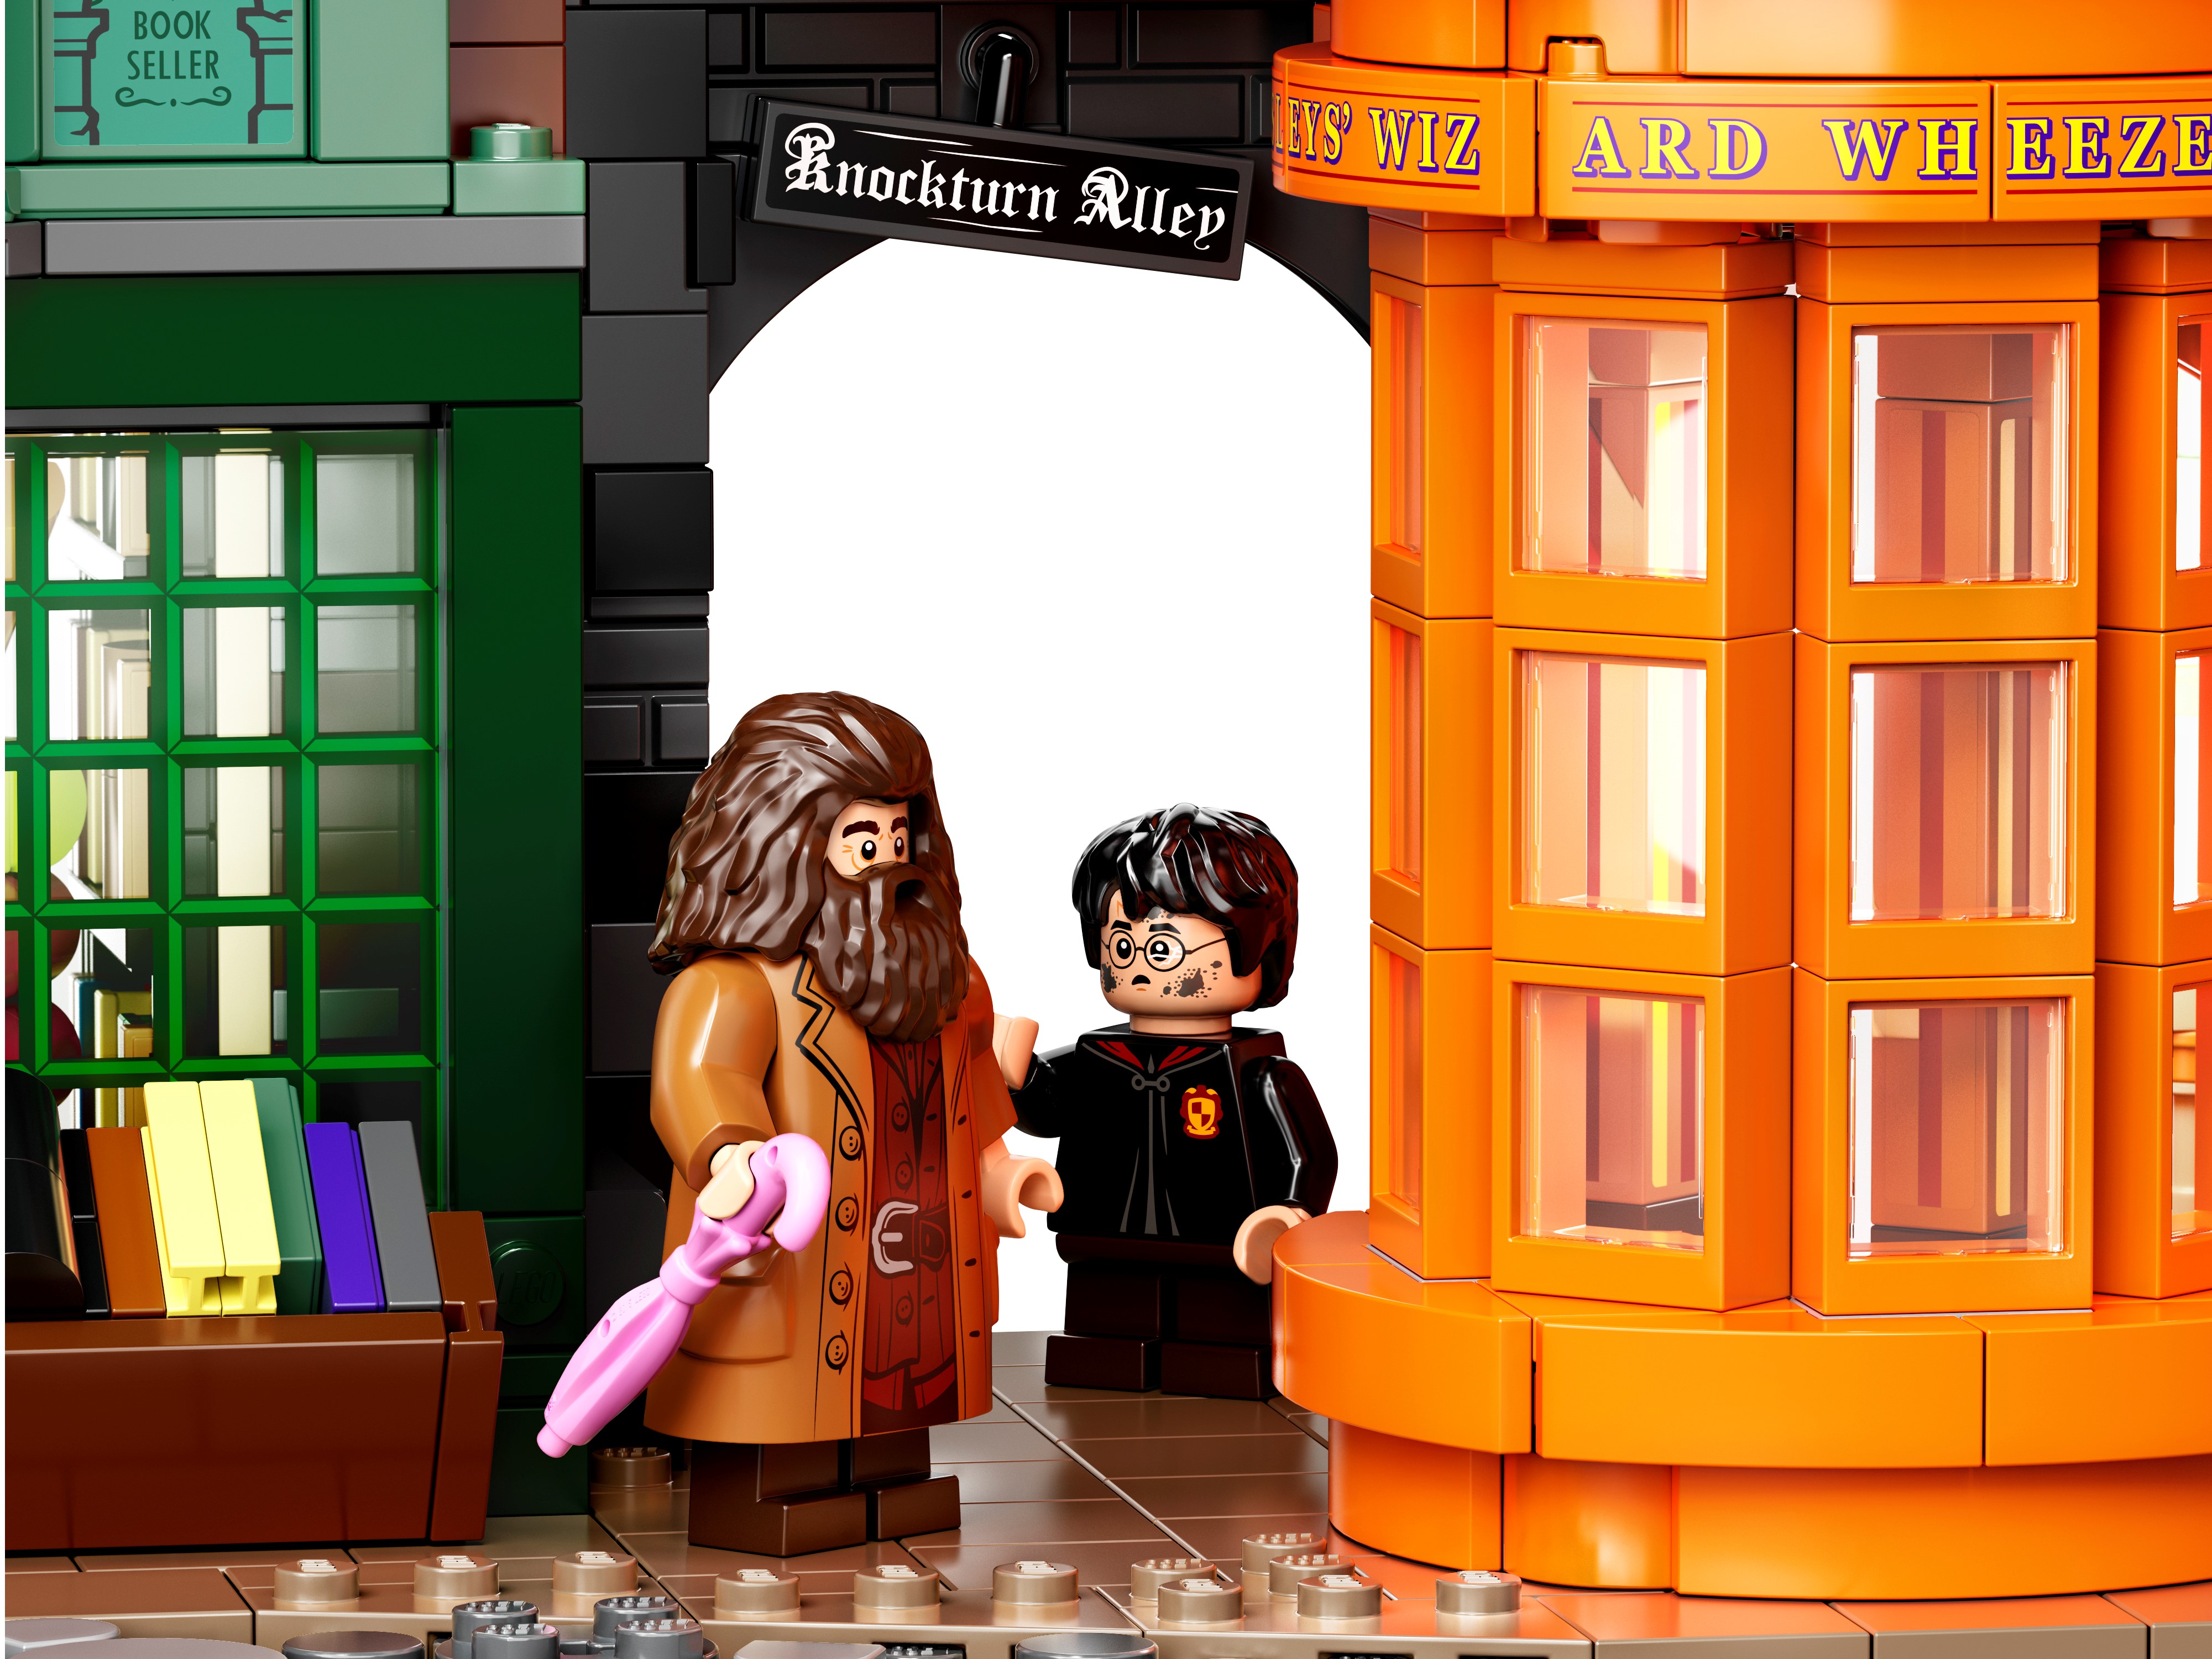 LEGO Harry Potter Diagon Alley Set 75978 - US